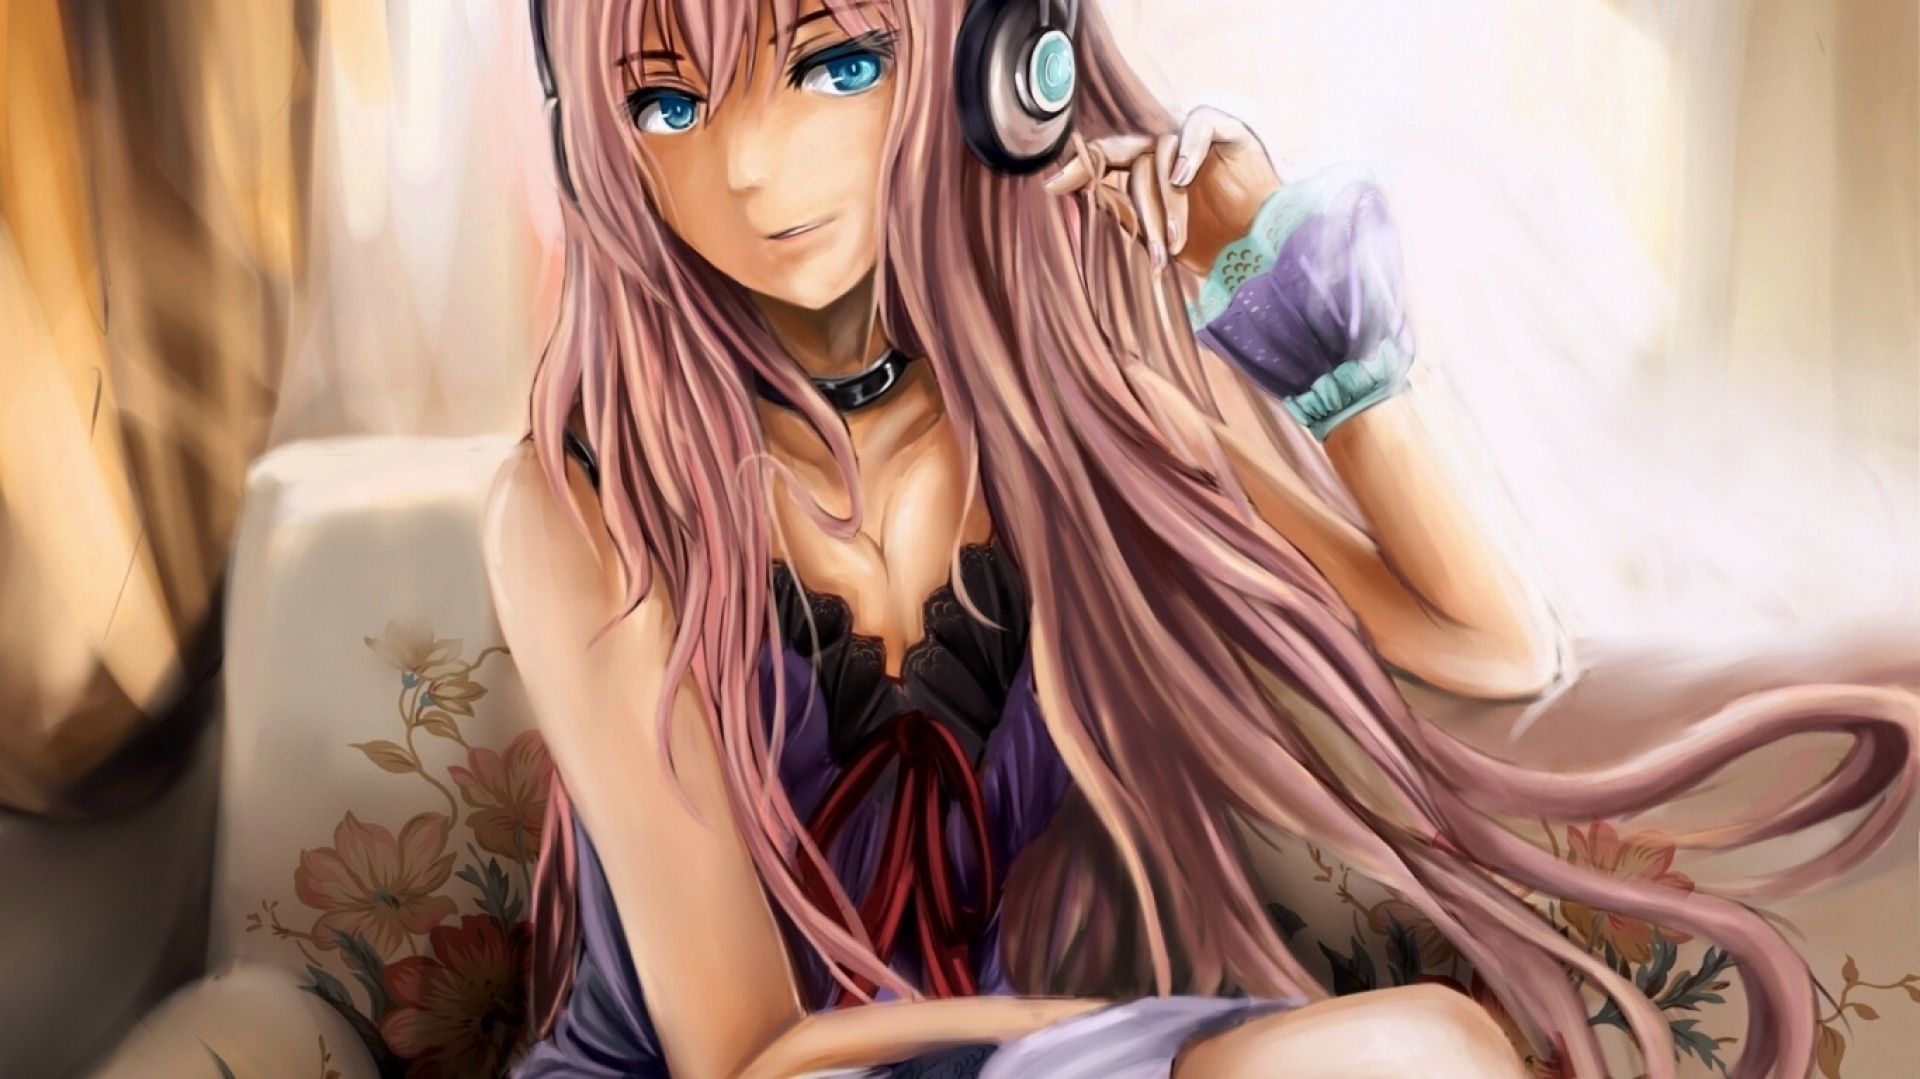 Cute Anime Gamer Girl iPhone Wallpaper HD